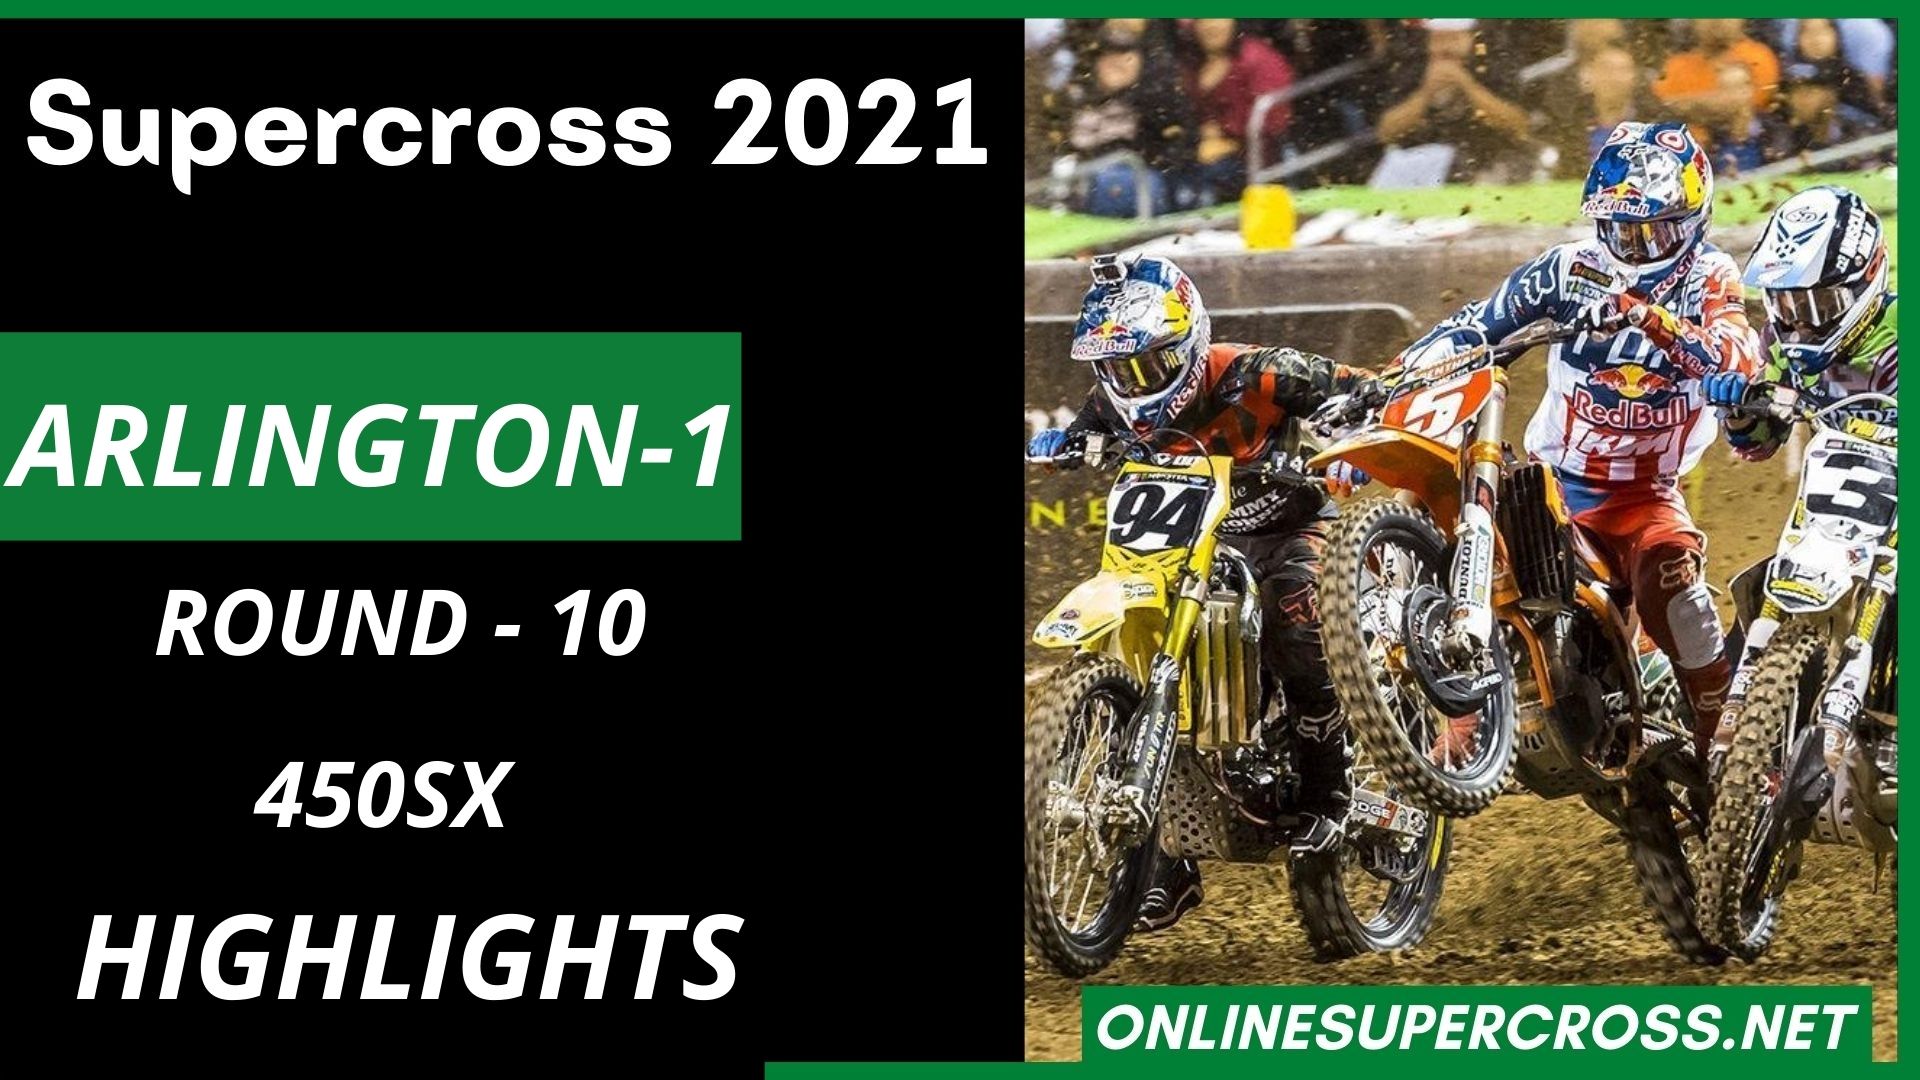 Arlington 1 Round 10 450SX Highlights 2021 Supercross